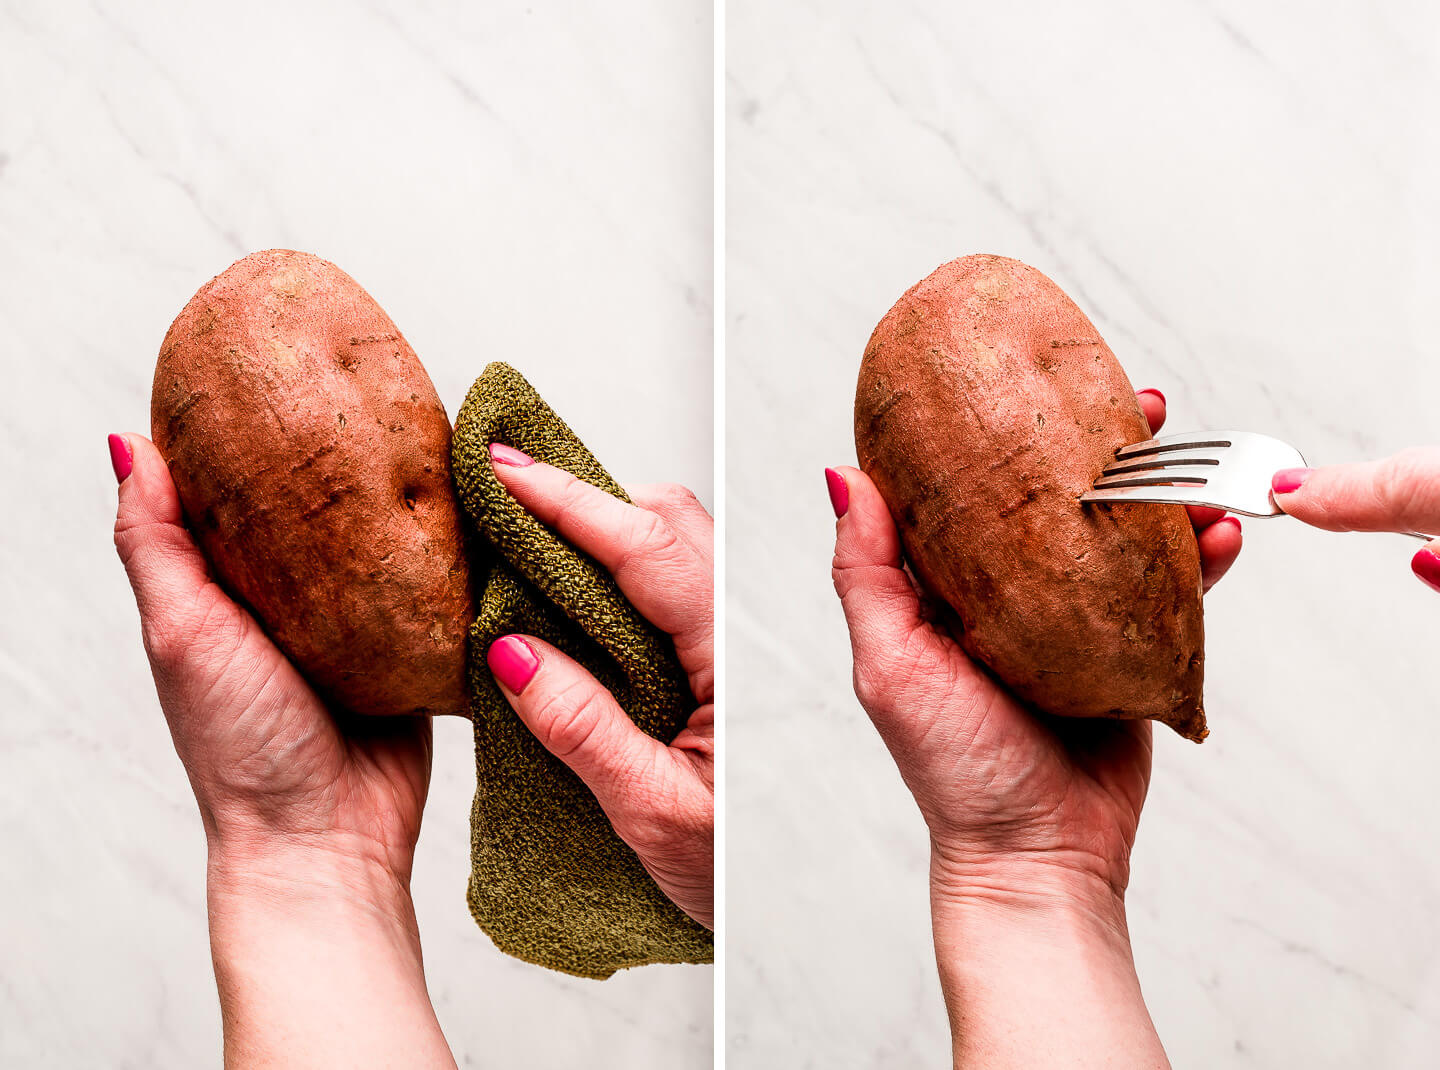 Diptych- Scrubbing a sweet potato; poking sweet potato with a fork.